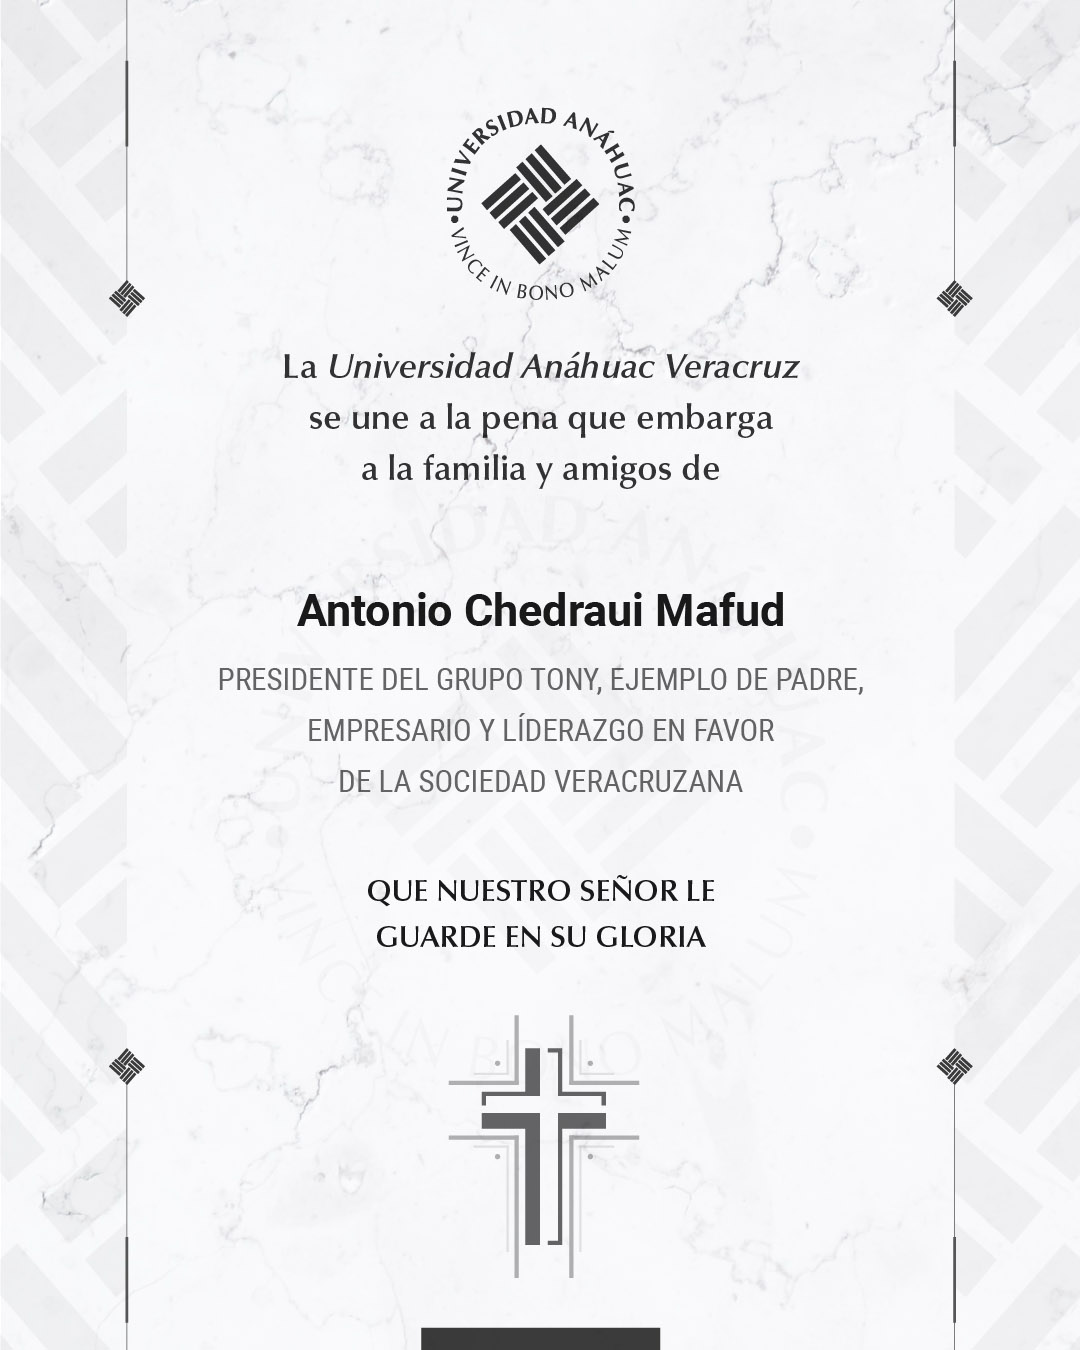 15 / 18 - Antonio Chedraui Mafud